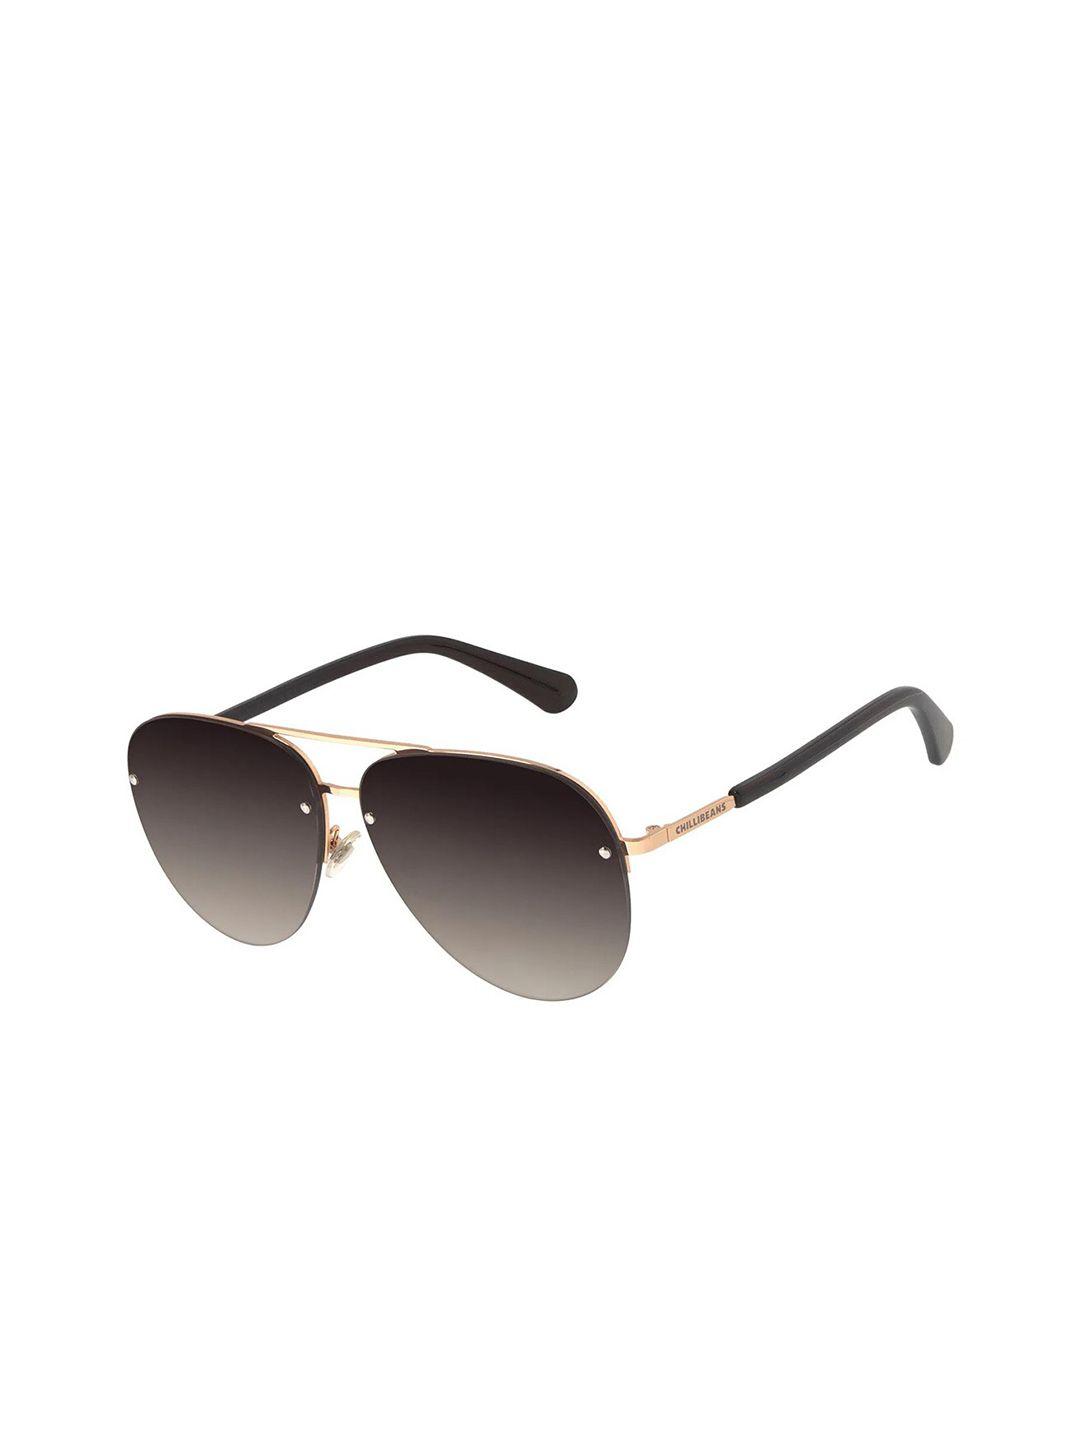 chilli beans unisex aviator sunglasses with uv protected lens-ocmt31872021